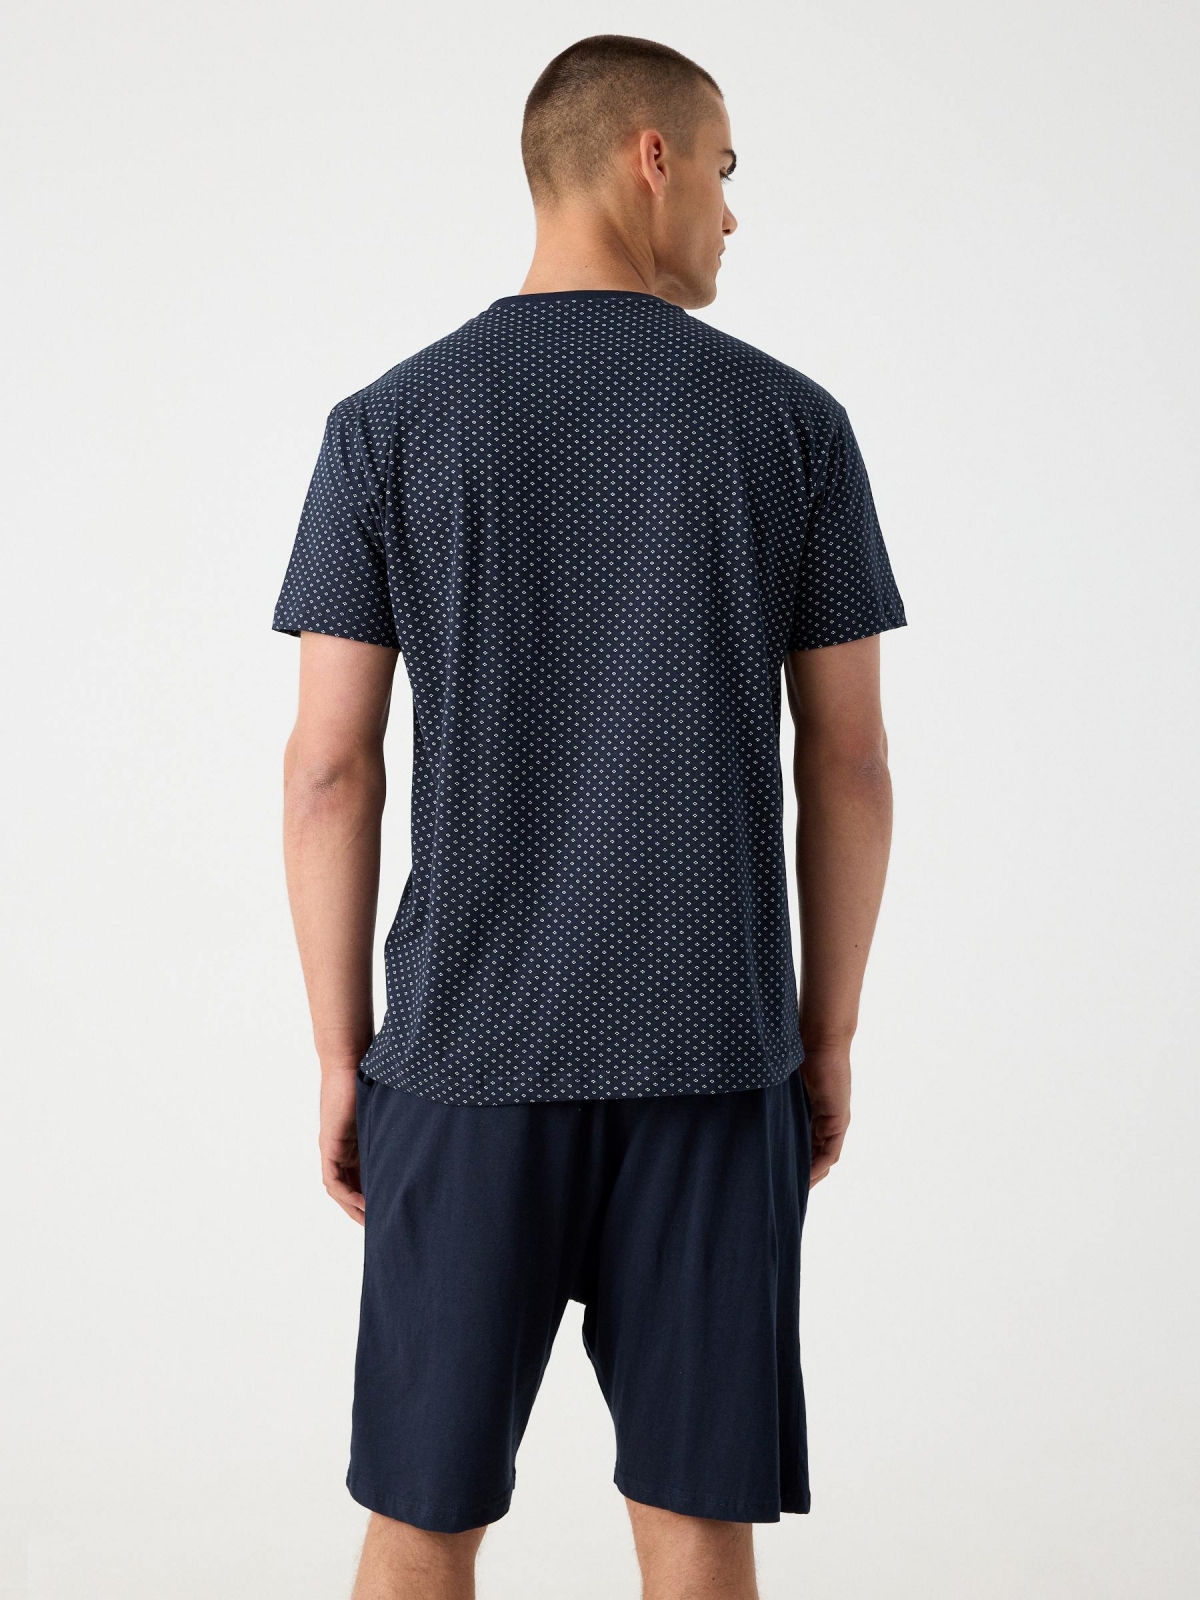 Pijama corto print motivos azul marino vista media trasera